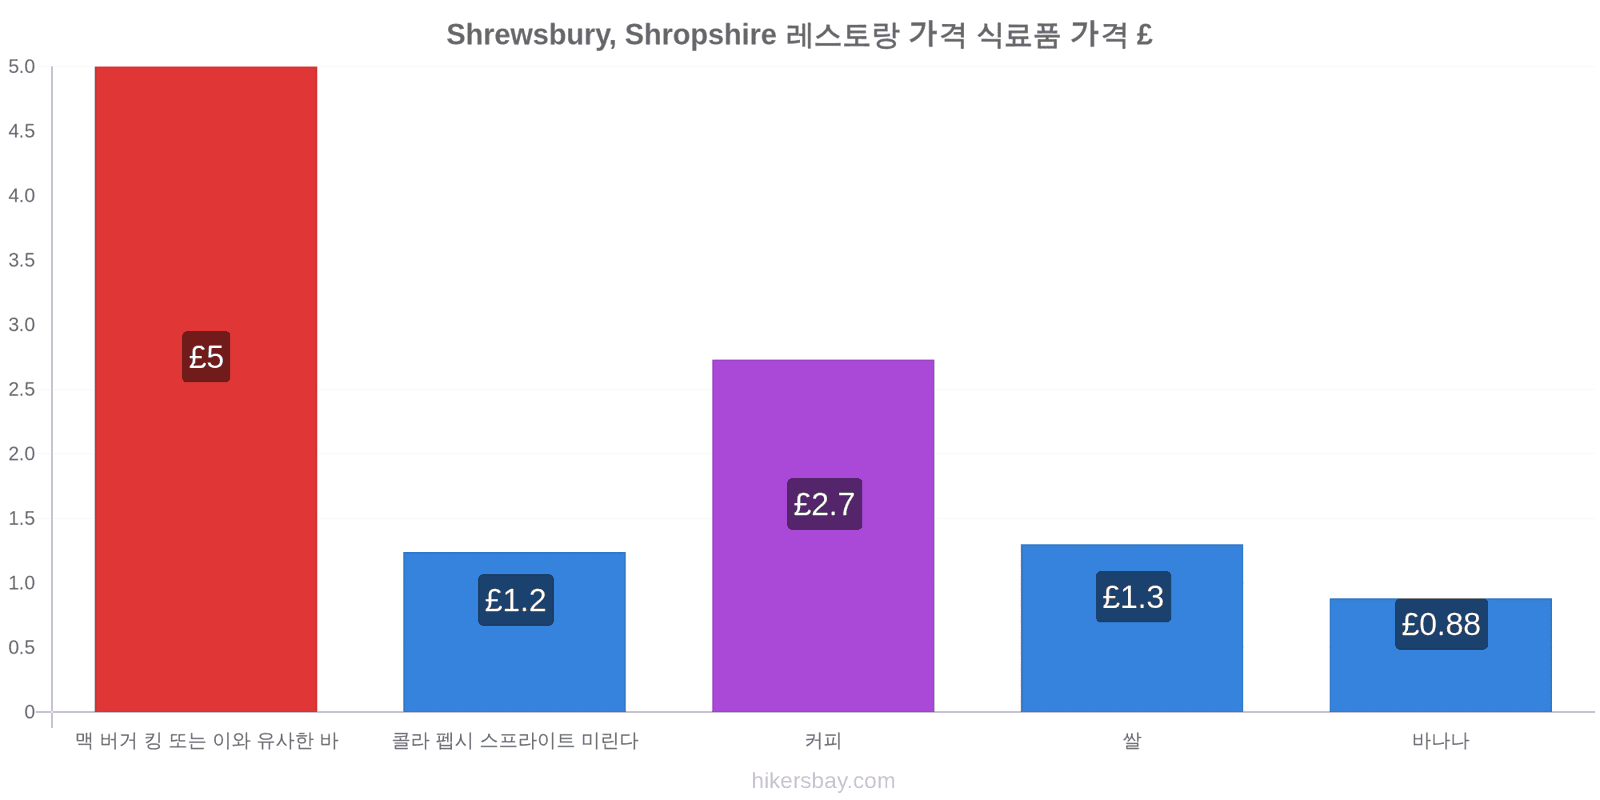 Shrewsbury, Shropshire 가격 변동 hikersbay.com